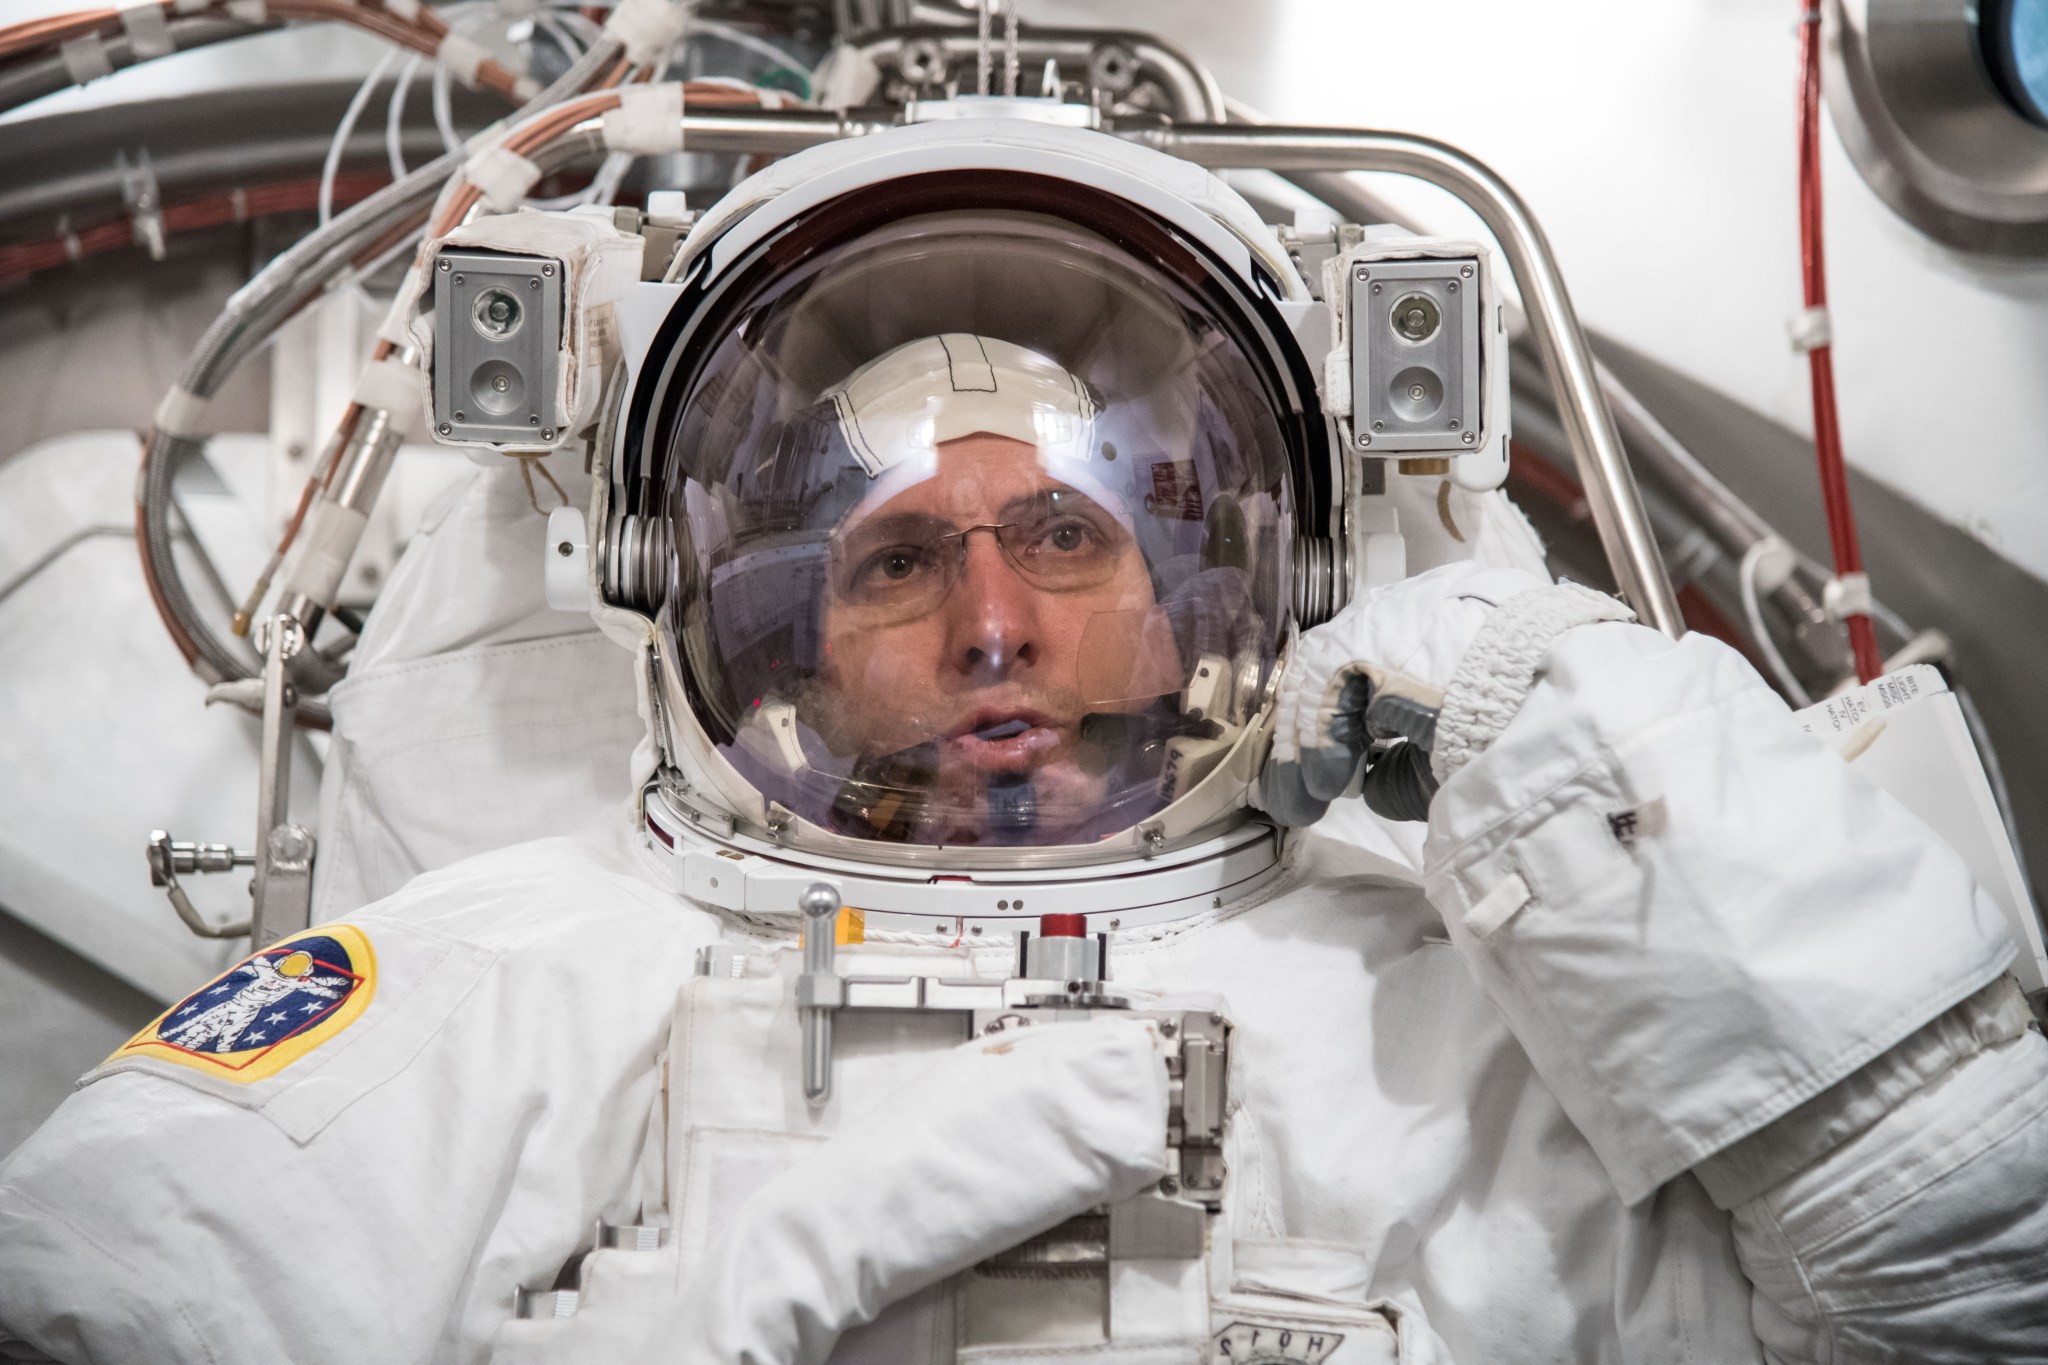 NASA astronaut Randy Bresnik